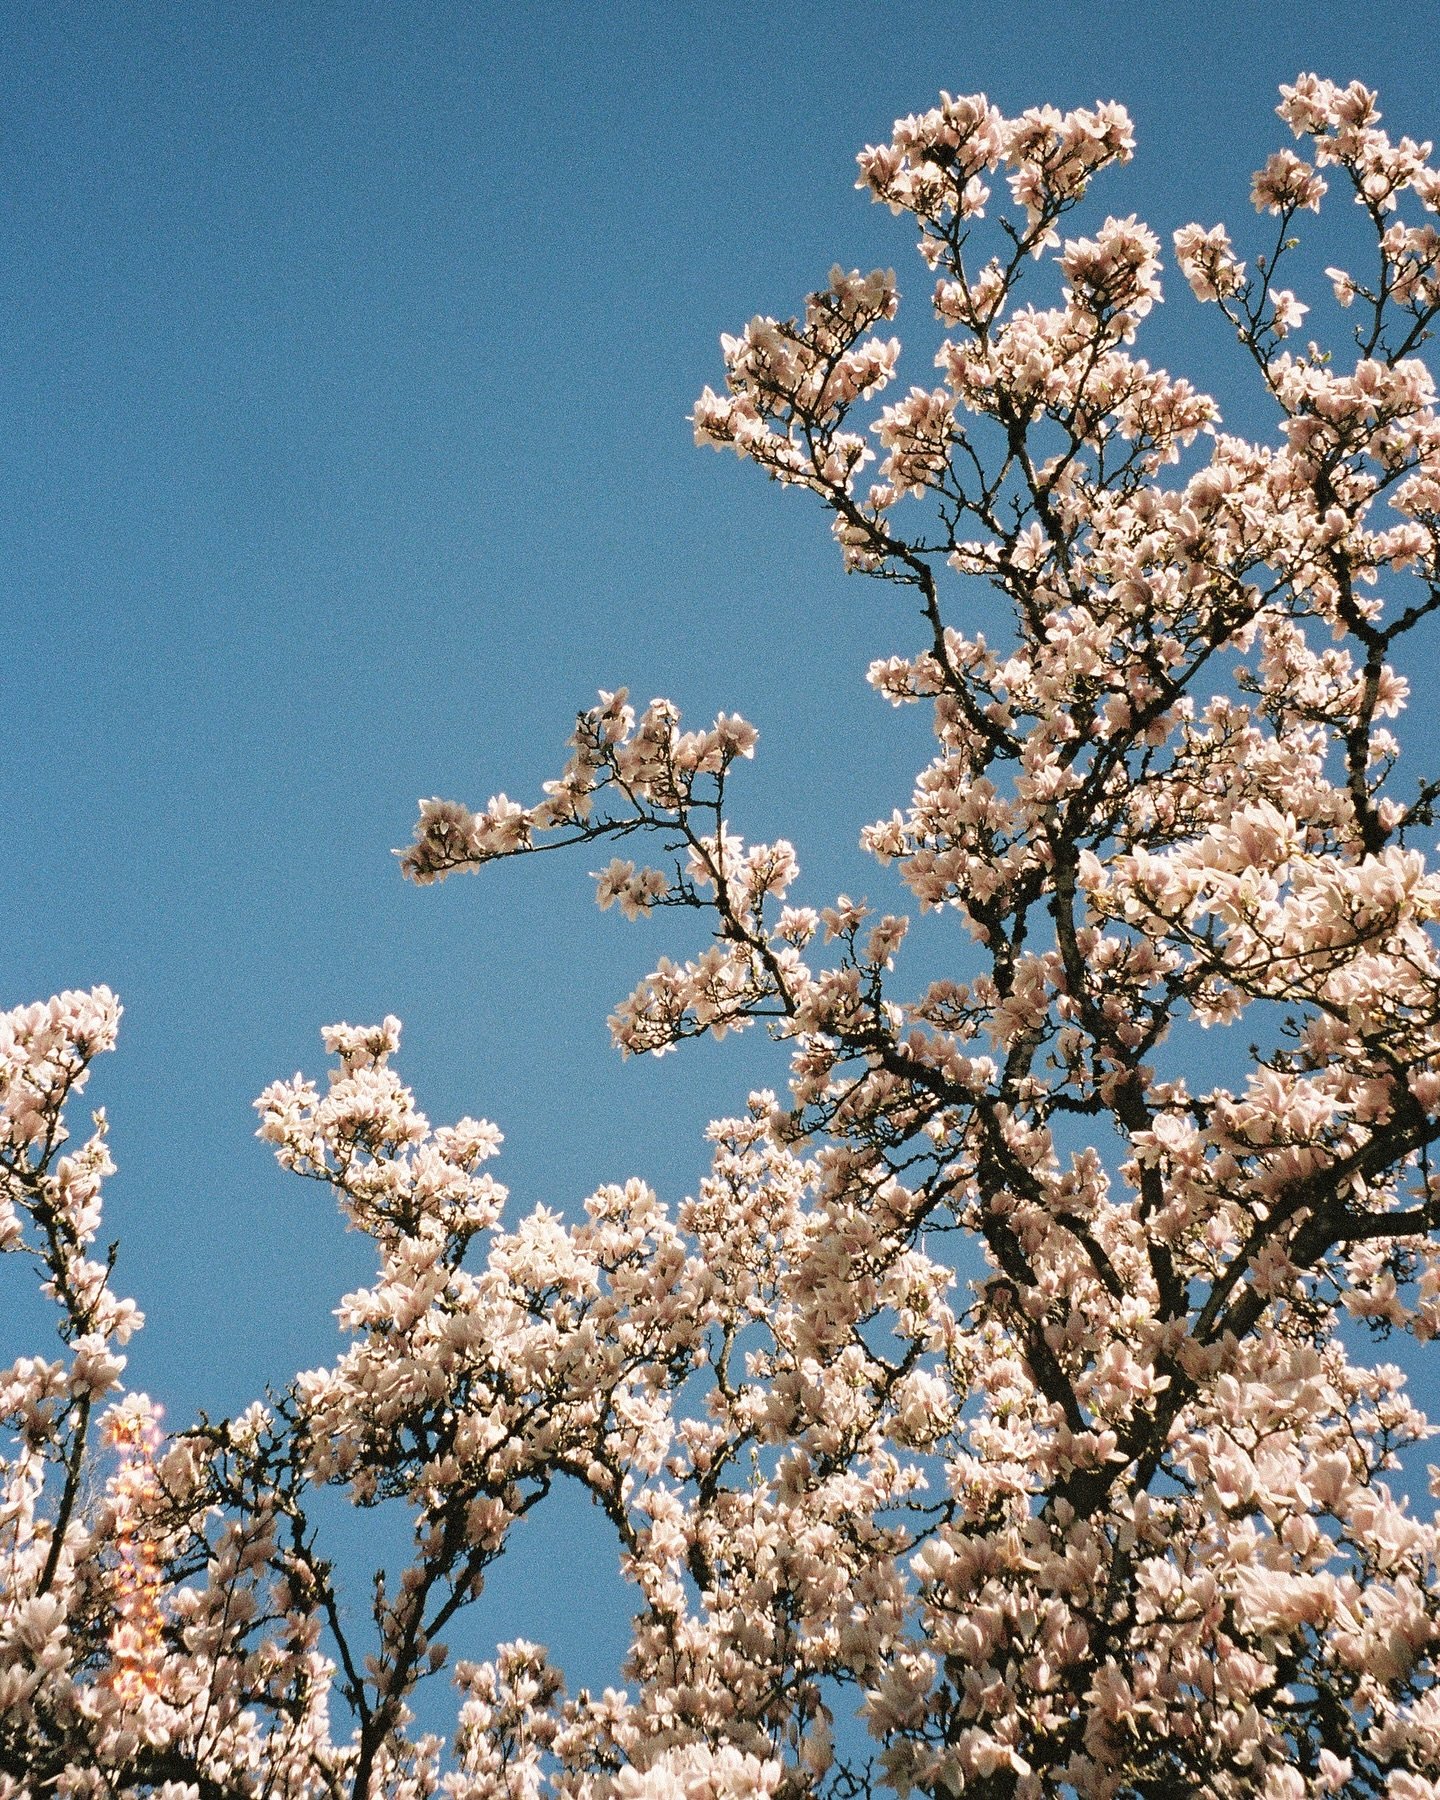 Spring in Portland. #35mmfilm